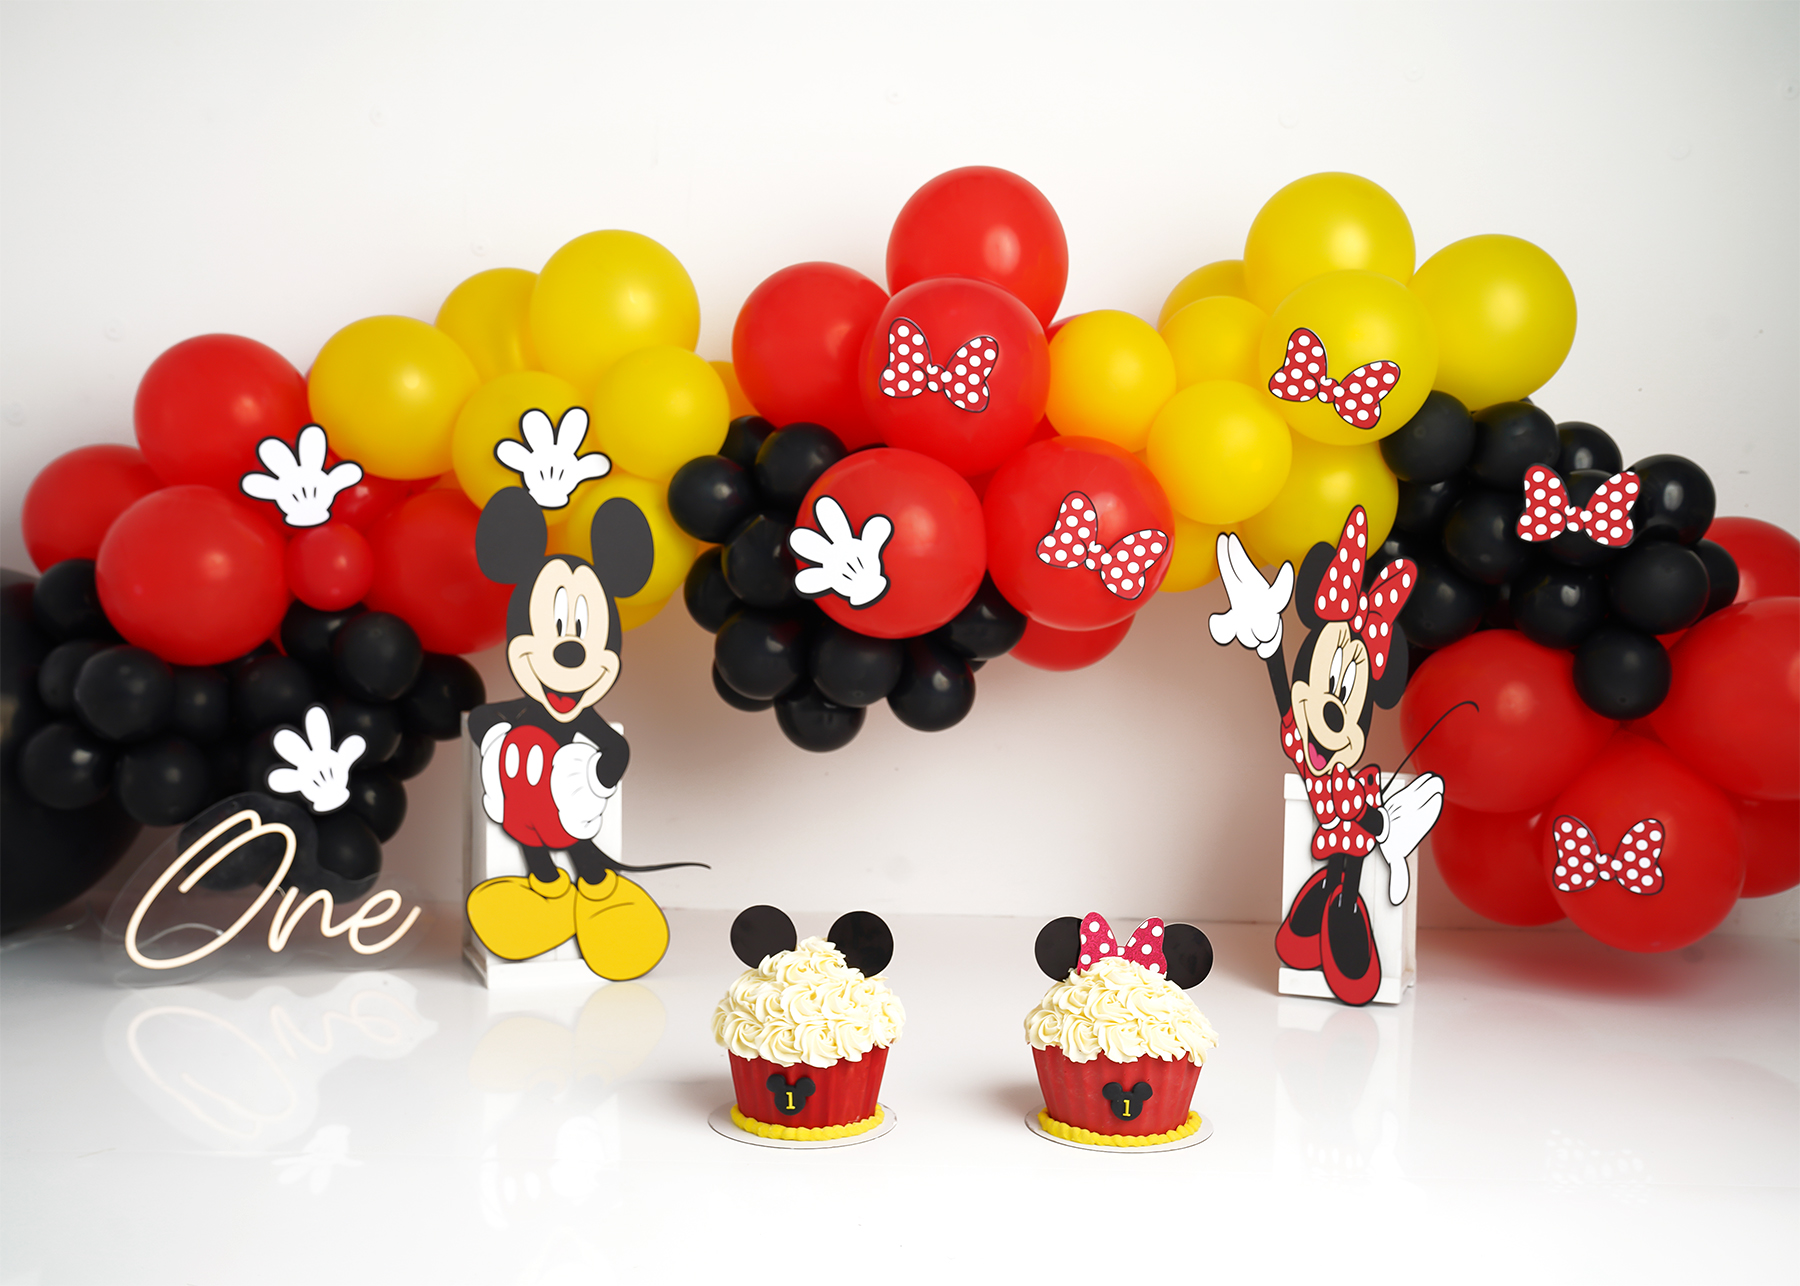 Minnie & Mickey Mouse cake smash